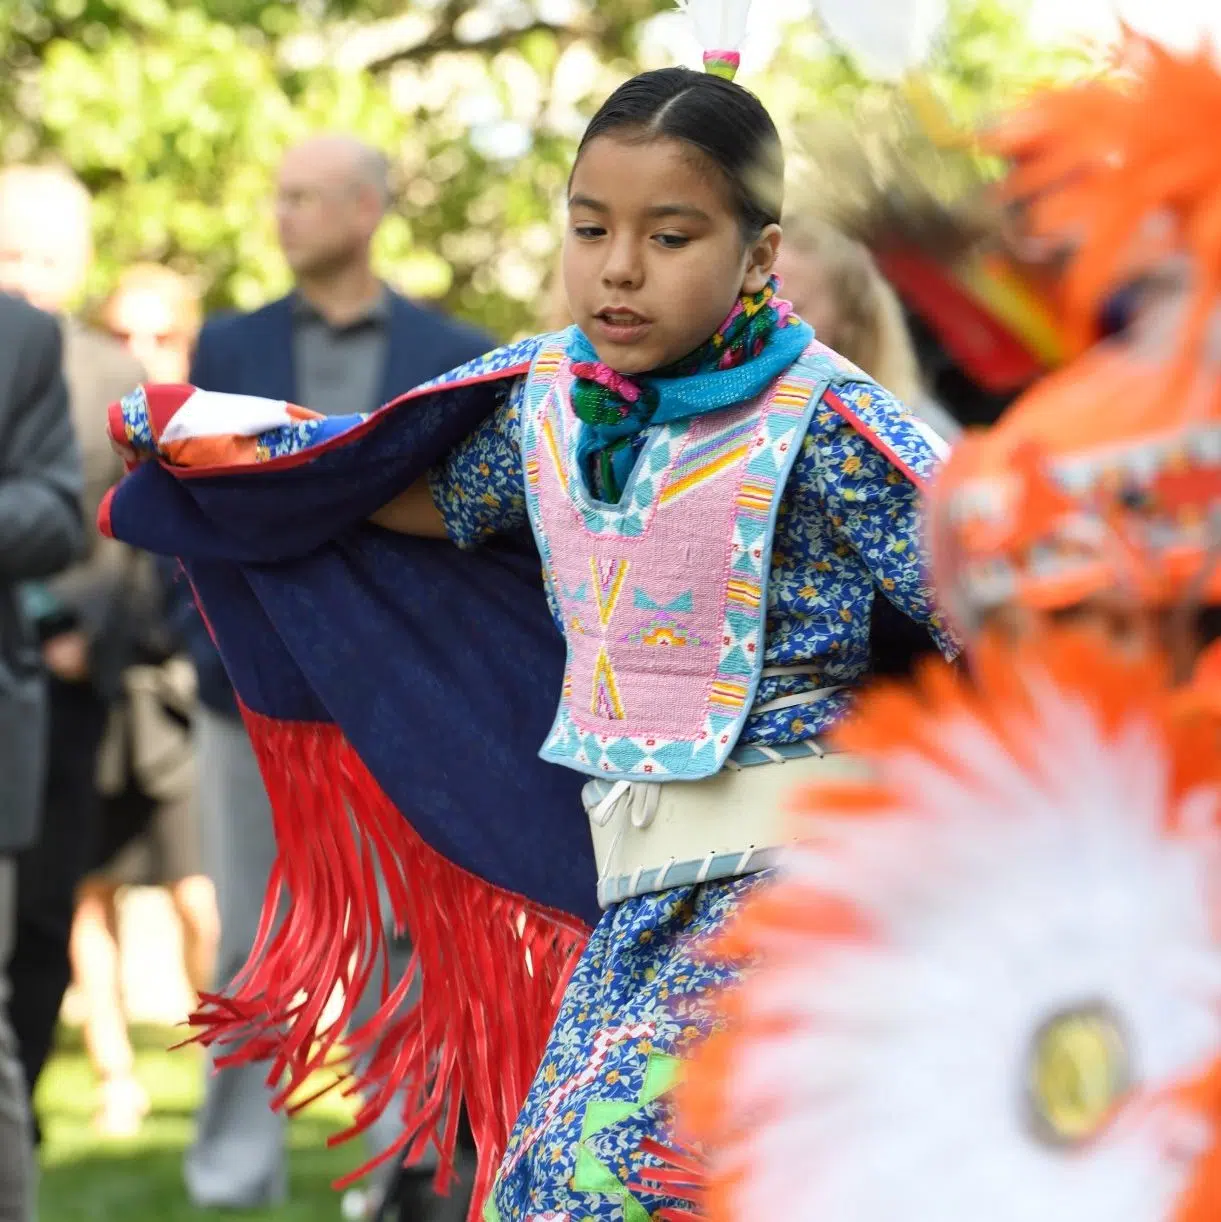 Regina celebrating National Indigenous Peoples Day Monday play92